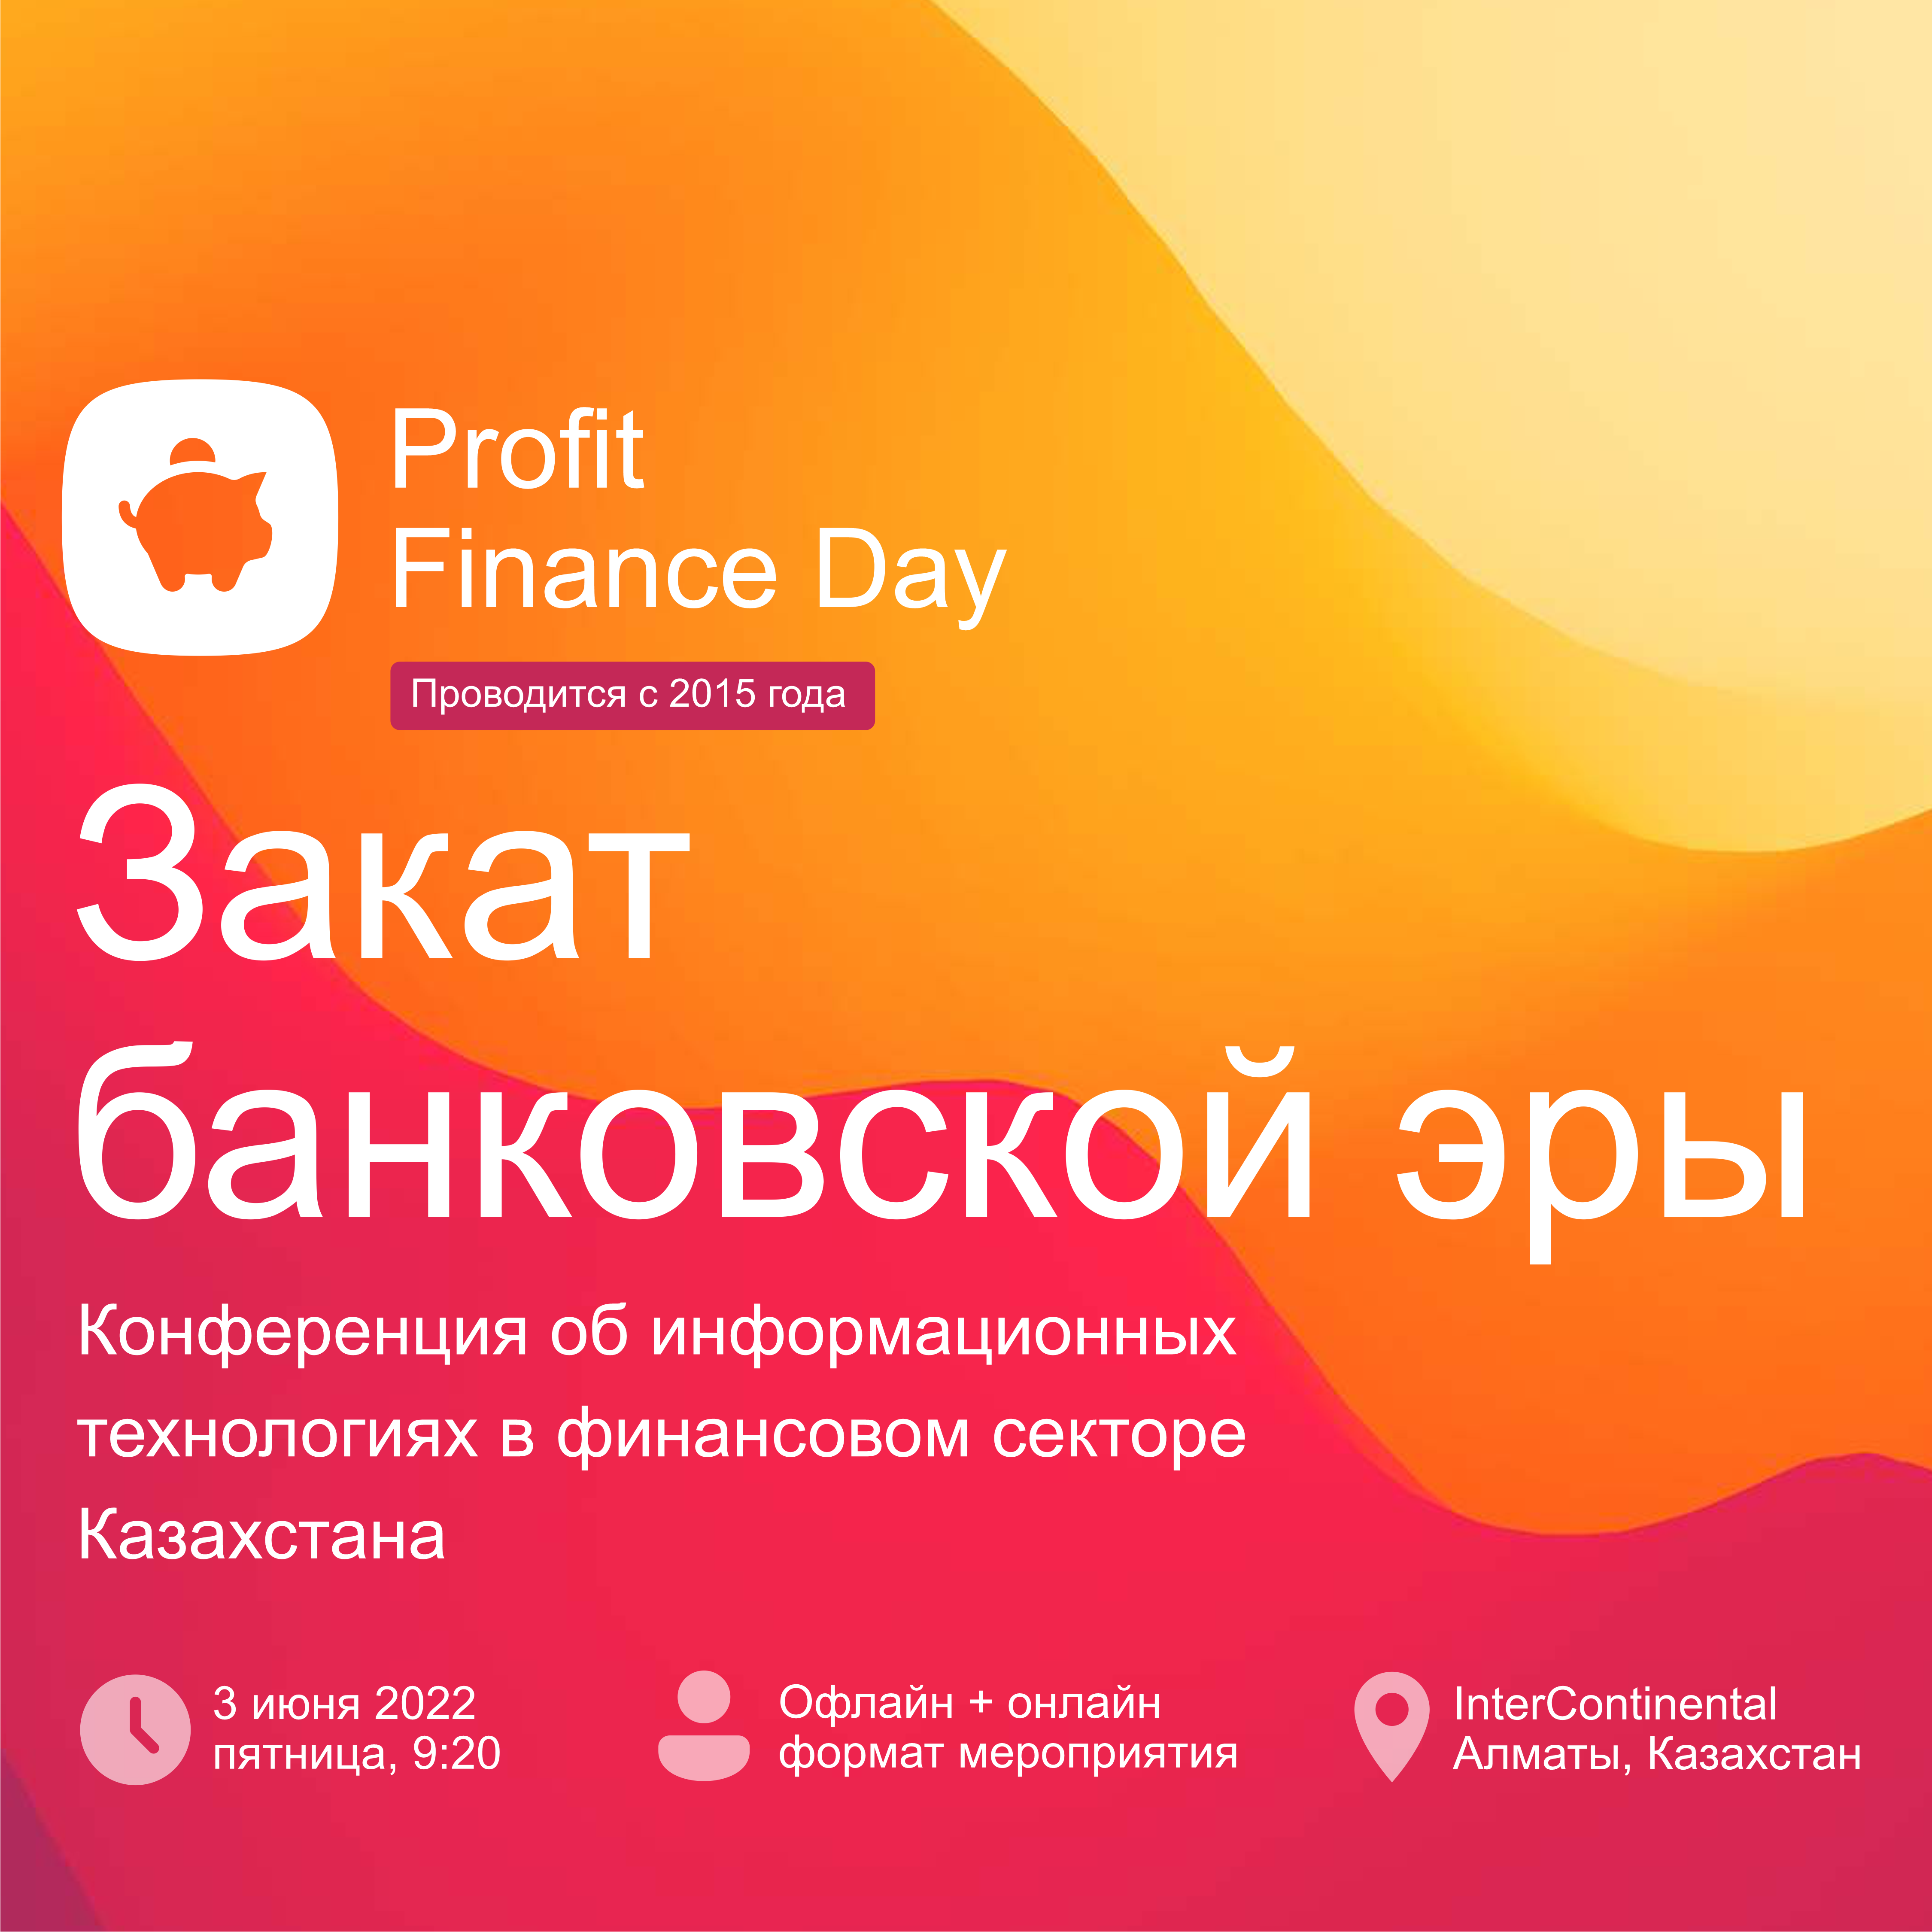 Profit Finance Day 2022